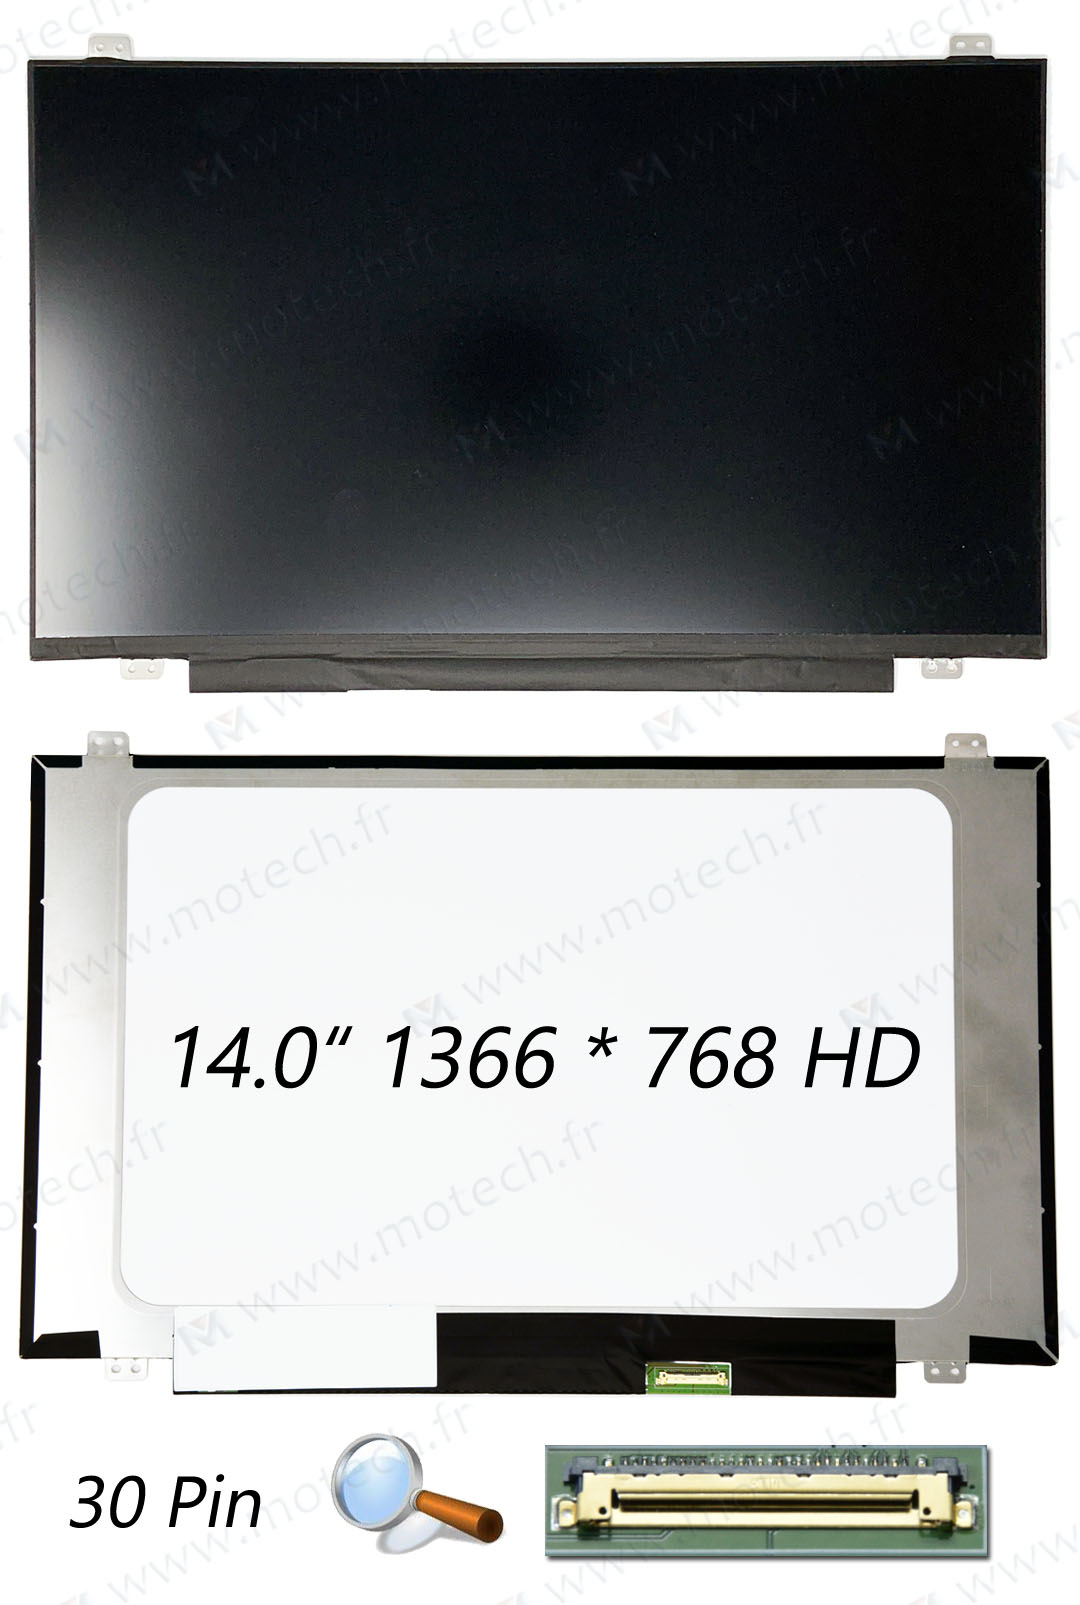 Asus VivoBook R410UA Dalle, Asus VivoBook R410UA ecran, Asus VivoBook R410UA screen, Asus VivoBook R410UA afficheur, Asus VivoBook R410UA dalle ecran, Asus VivoBook R410UA LCD,